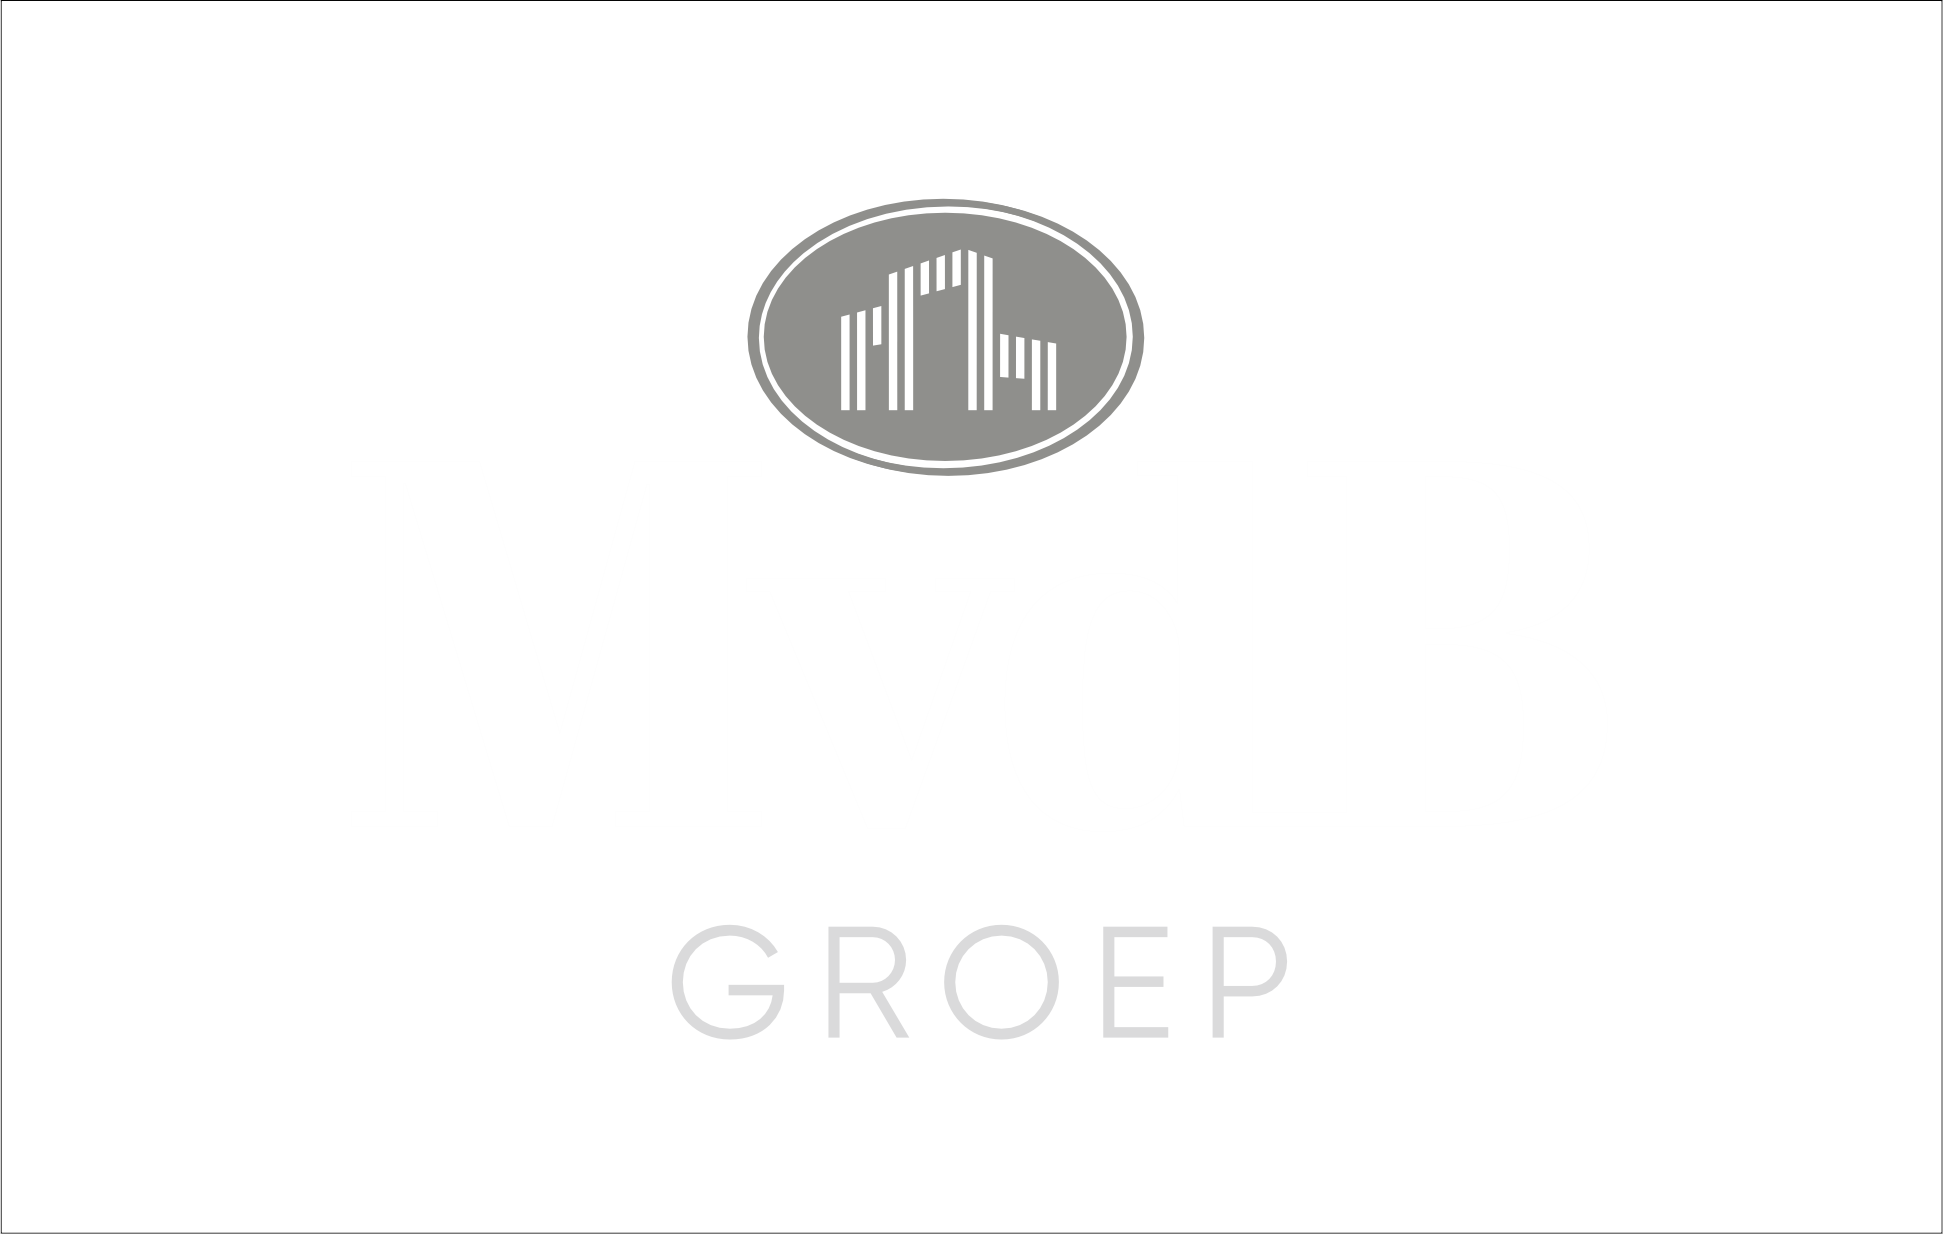 MvdB Groep